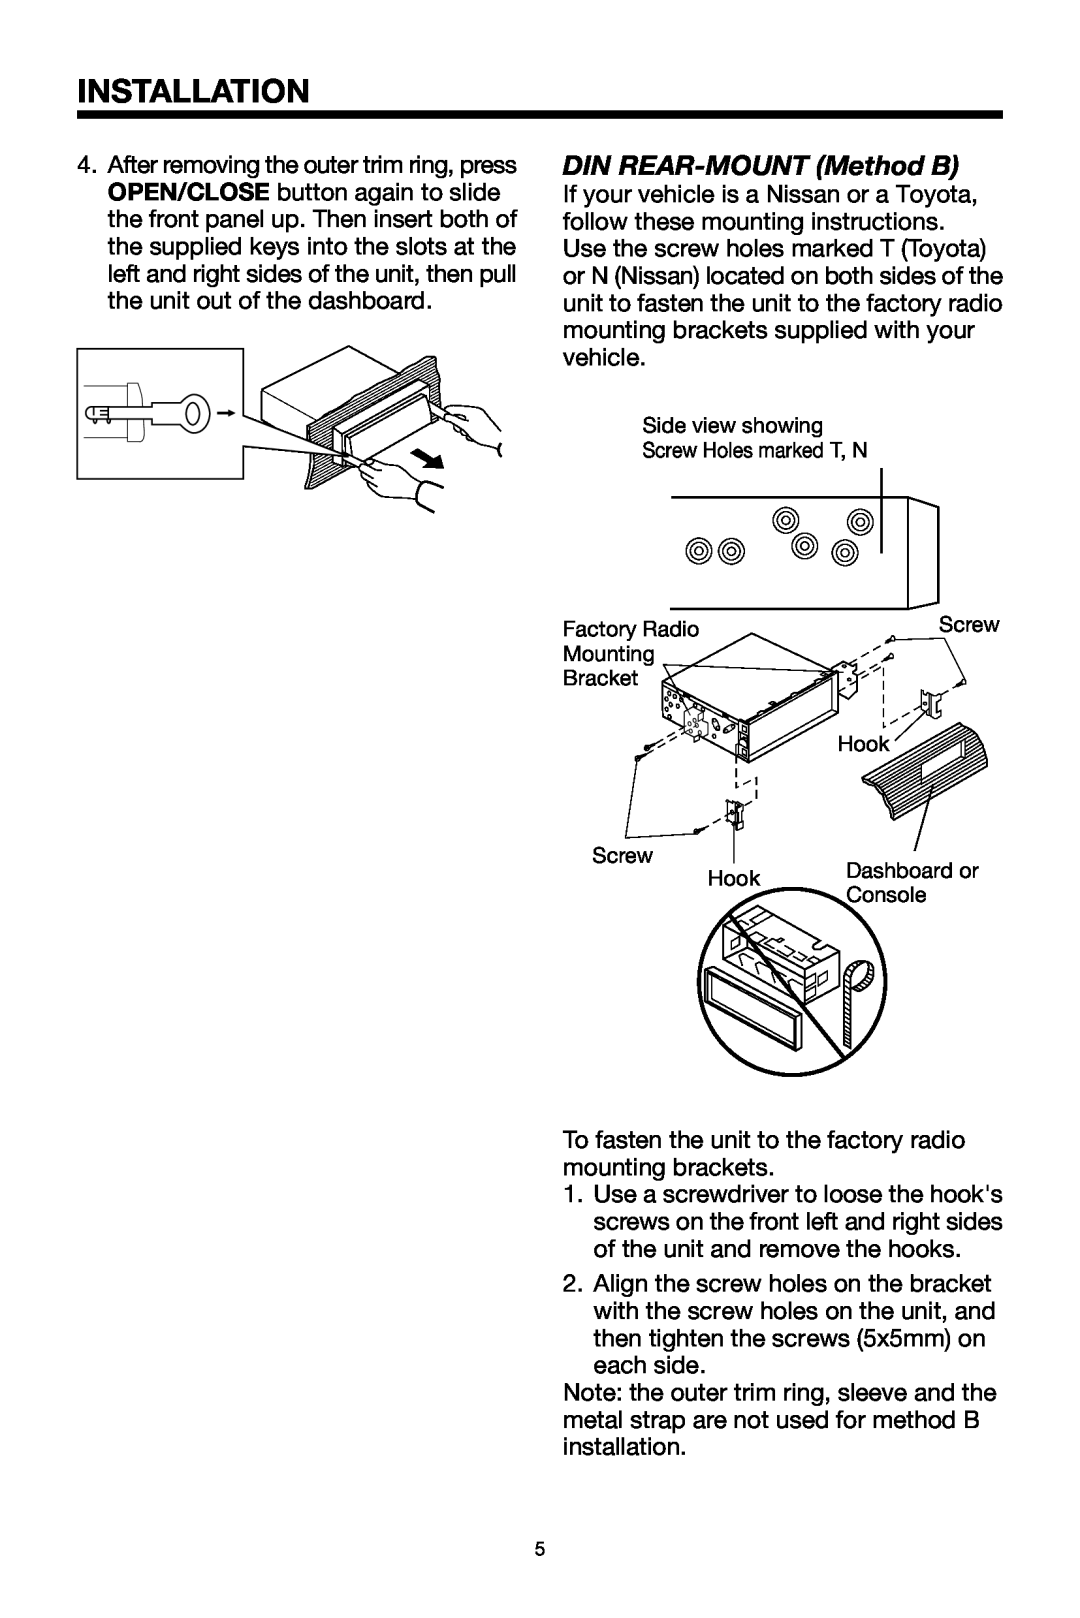 StreamLight MS2015 owner manual DIN REAR-MOUNTMethod B, Installation 